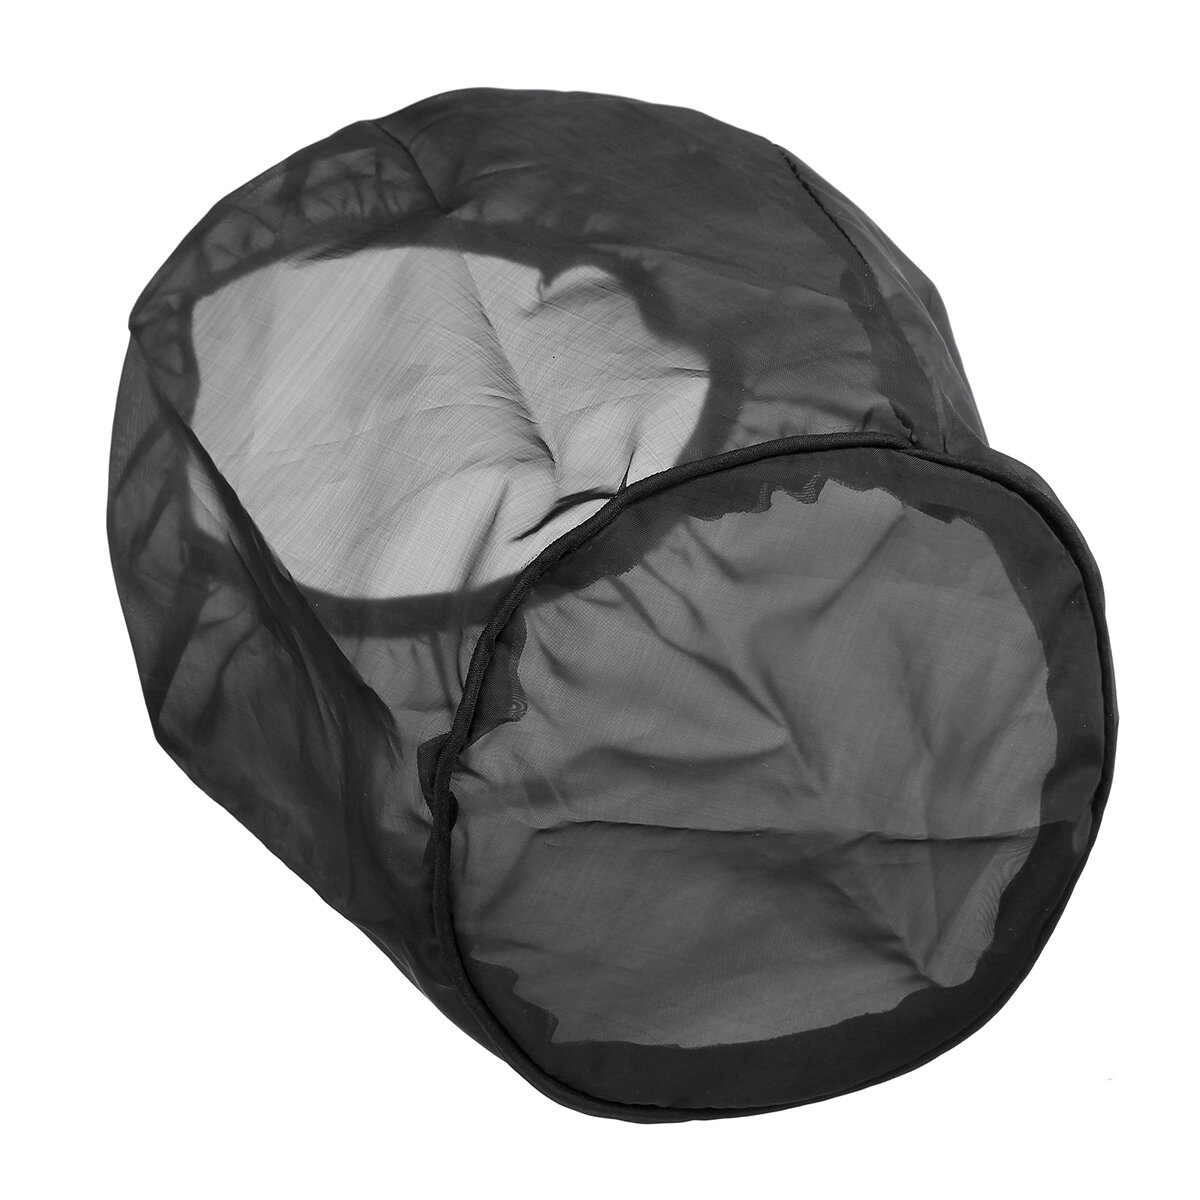 Waterproof Air Filter Cleaner Protective Rain Sock Cover Motorcycle Universal